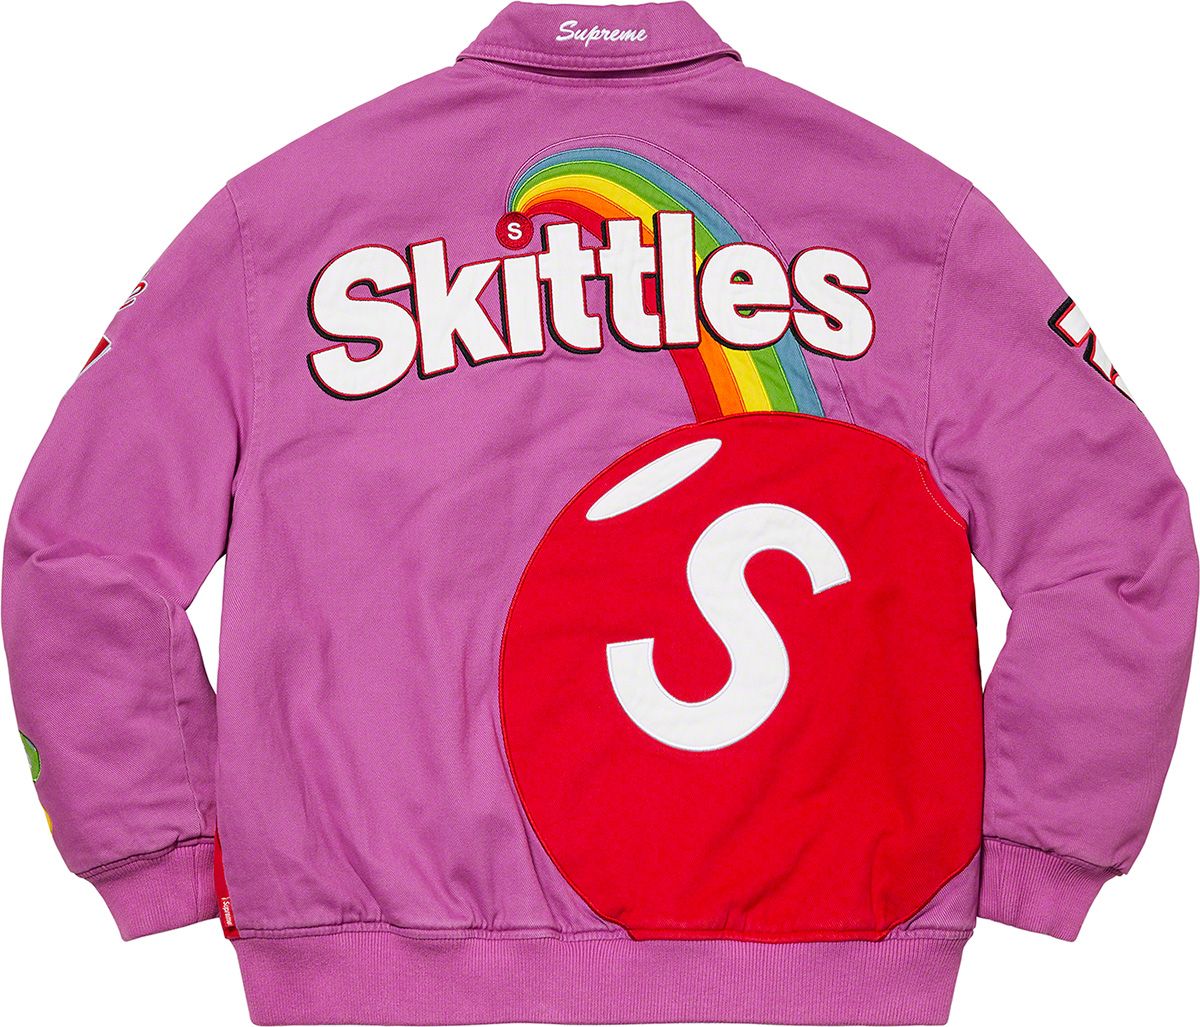 Supreme®/Skittles®/<wbr>Mitchell & Ness® Varsity Jacket - Fall 